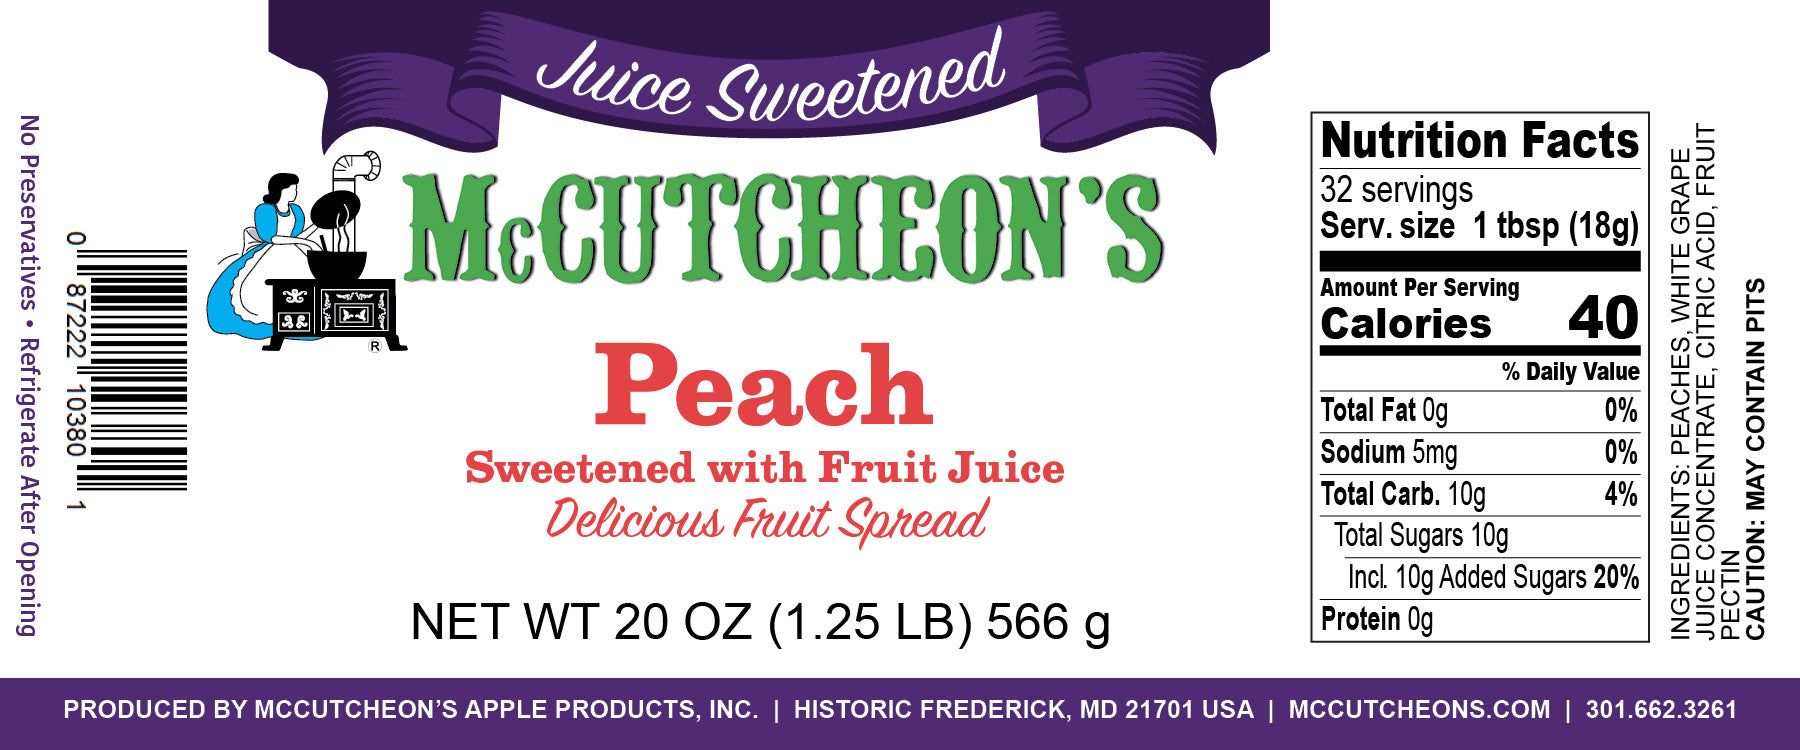 nutrition label for jar of McCutcheon's juice sweetened peach spread